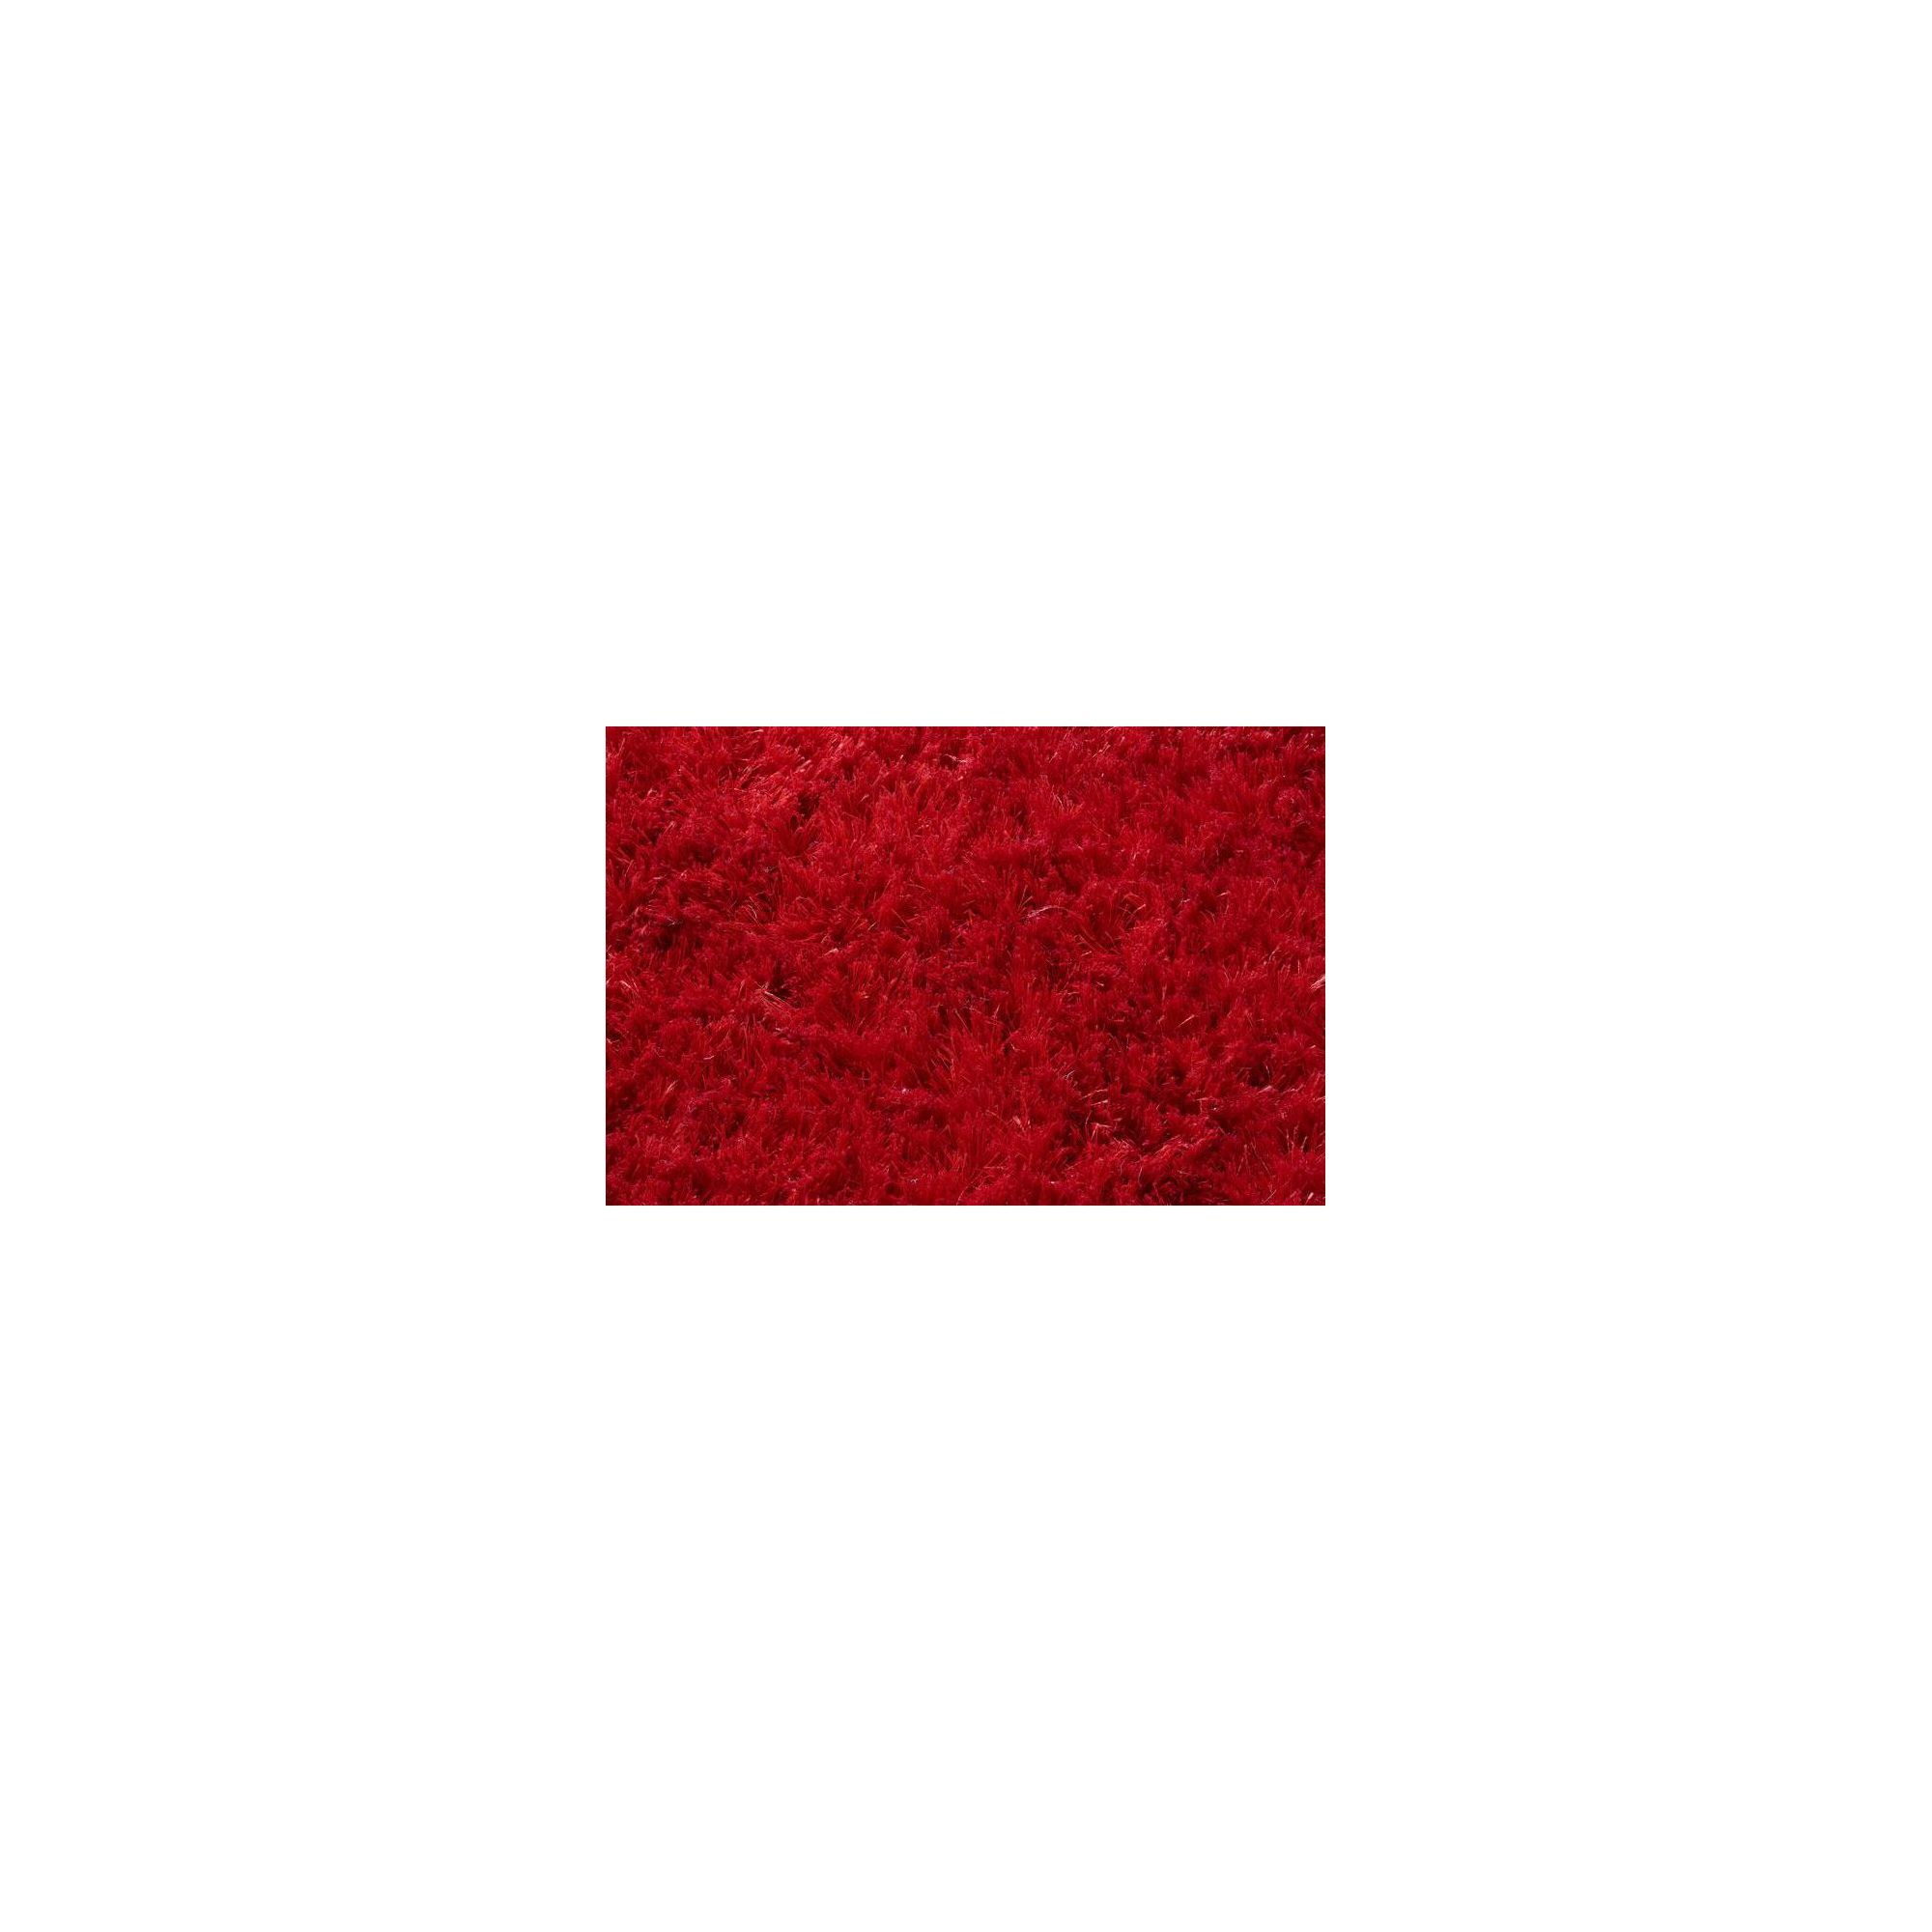 Linie Design Mantova Red Shag Rug - 240cm x 170cm at Tesco Direct